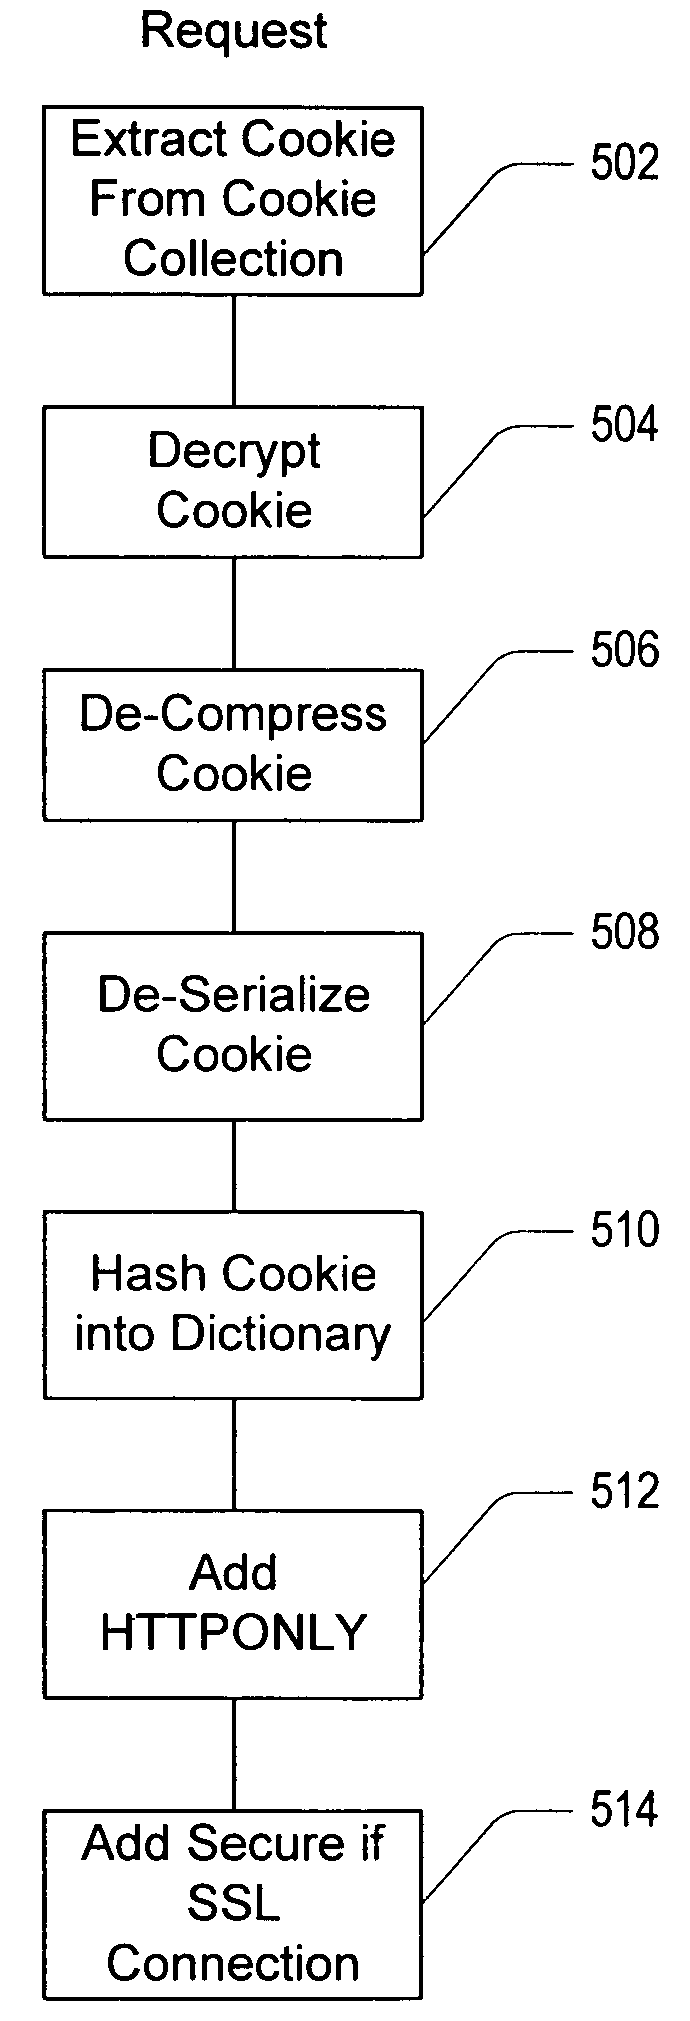 Enhanced cookie management